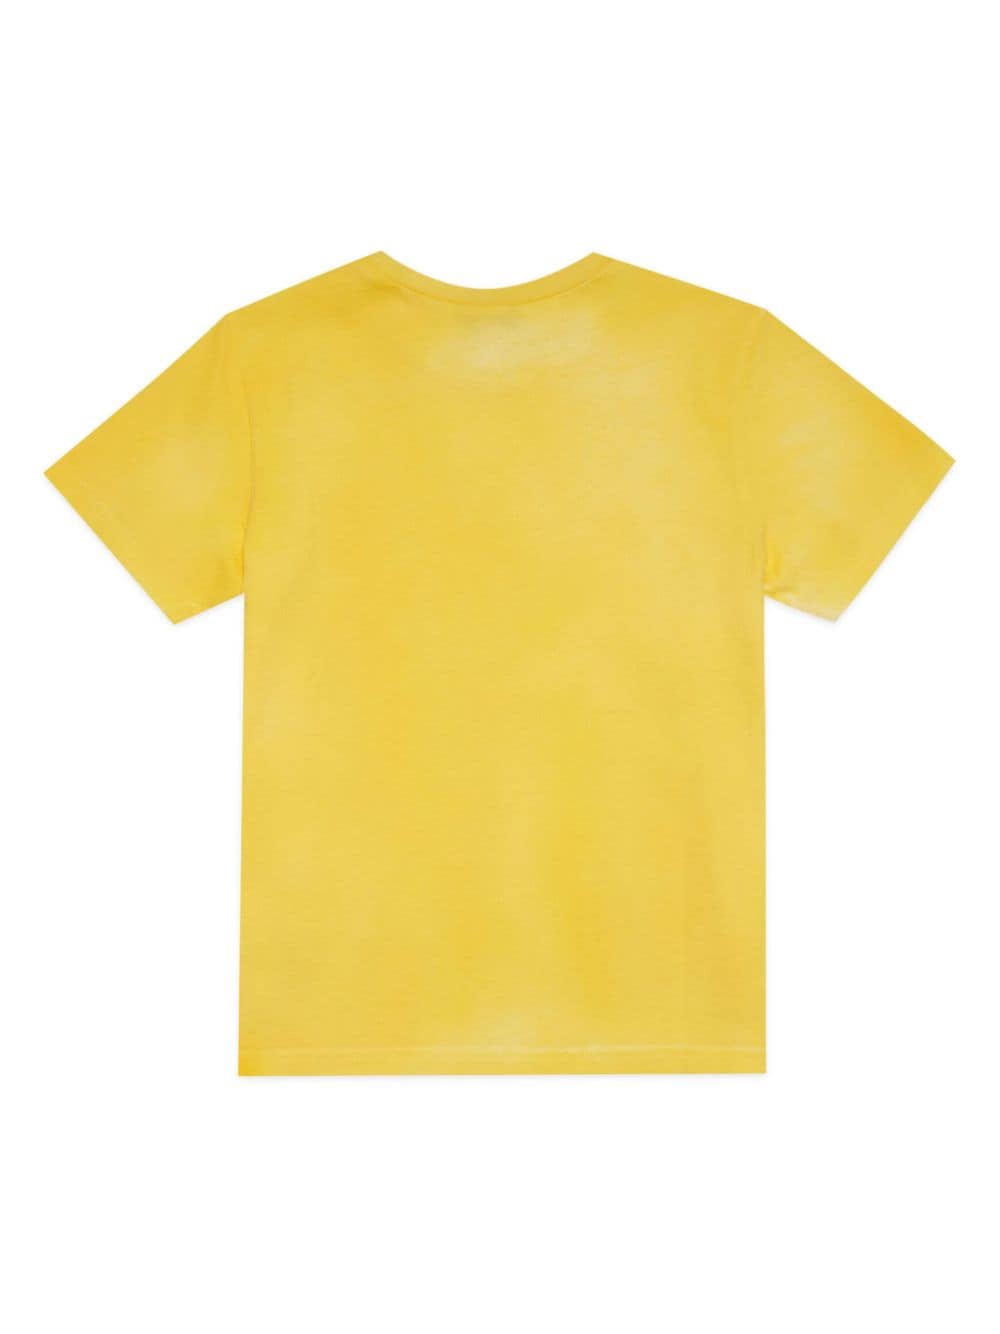 T-shirt gialla unisex